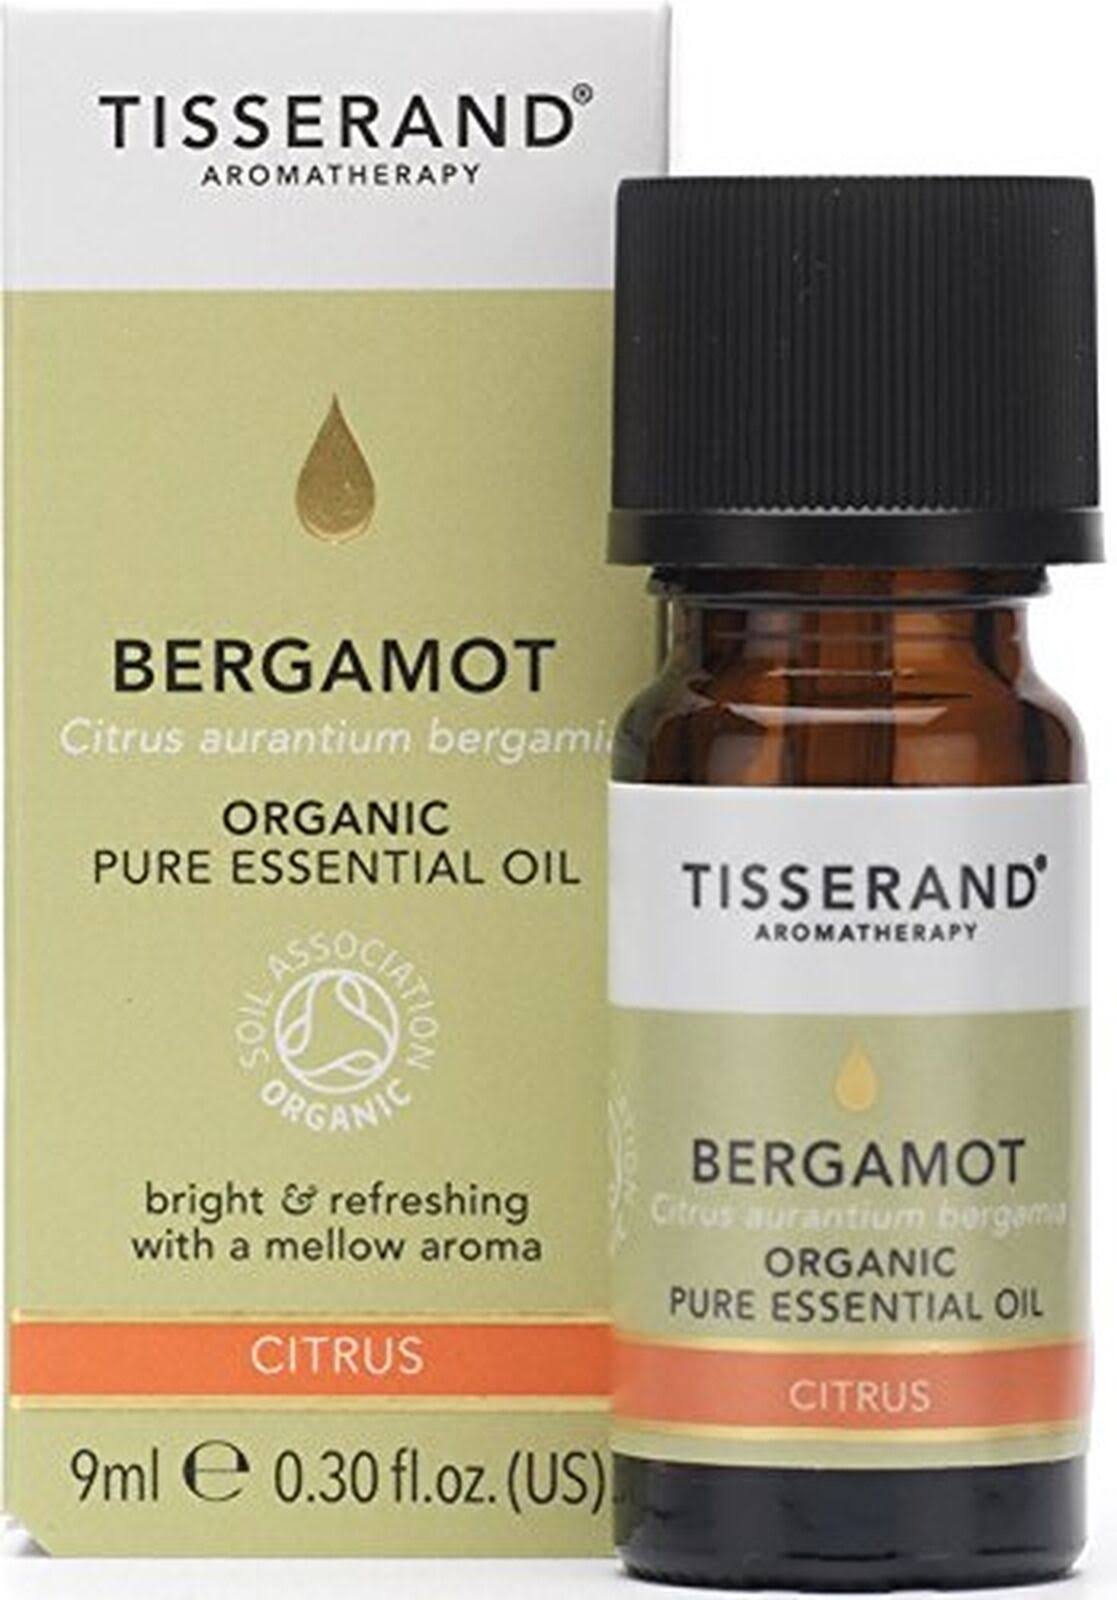 Tisserand Aromatherapy Organic Pure Essential Oil - Bergamot, 9ml